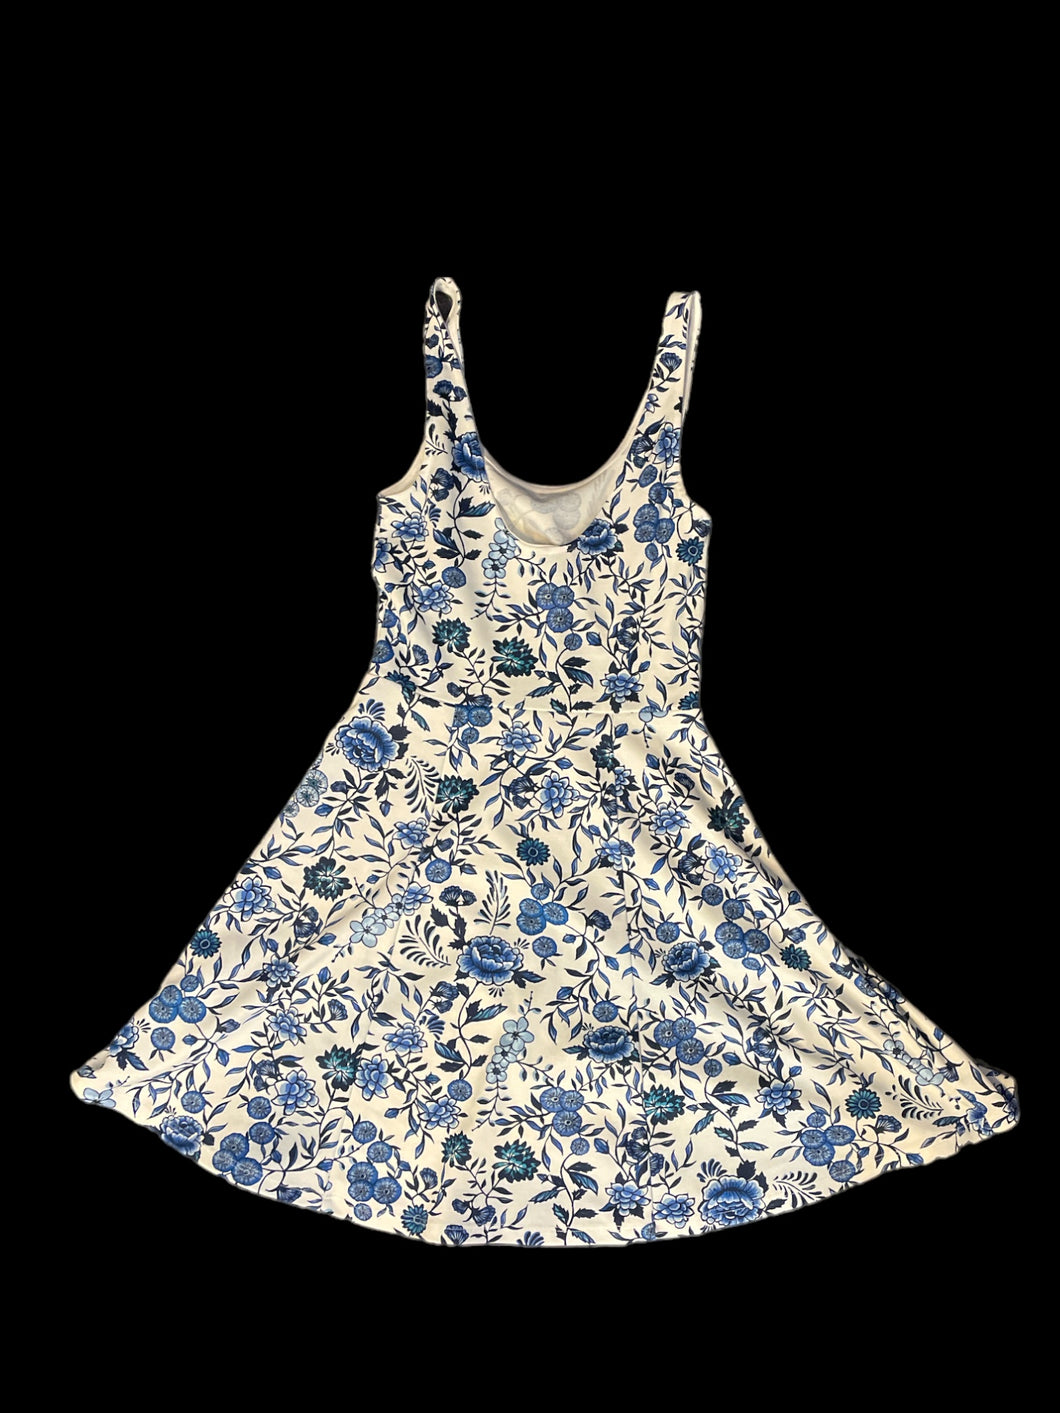 XXS White scoop neck dress w/ blue floral pattern